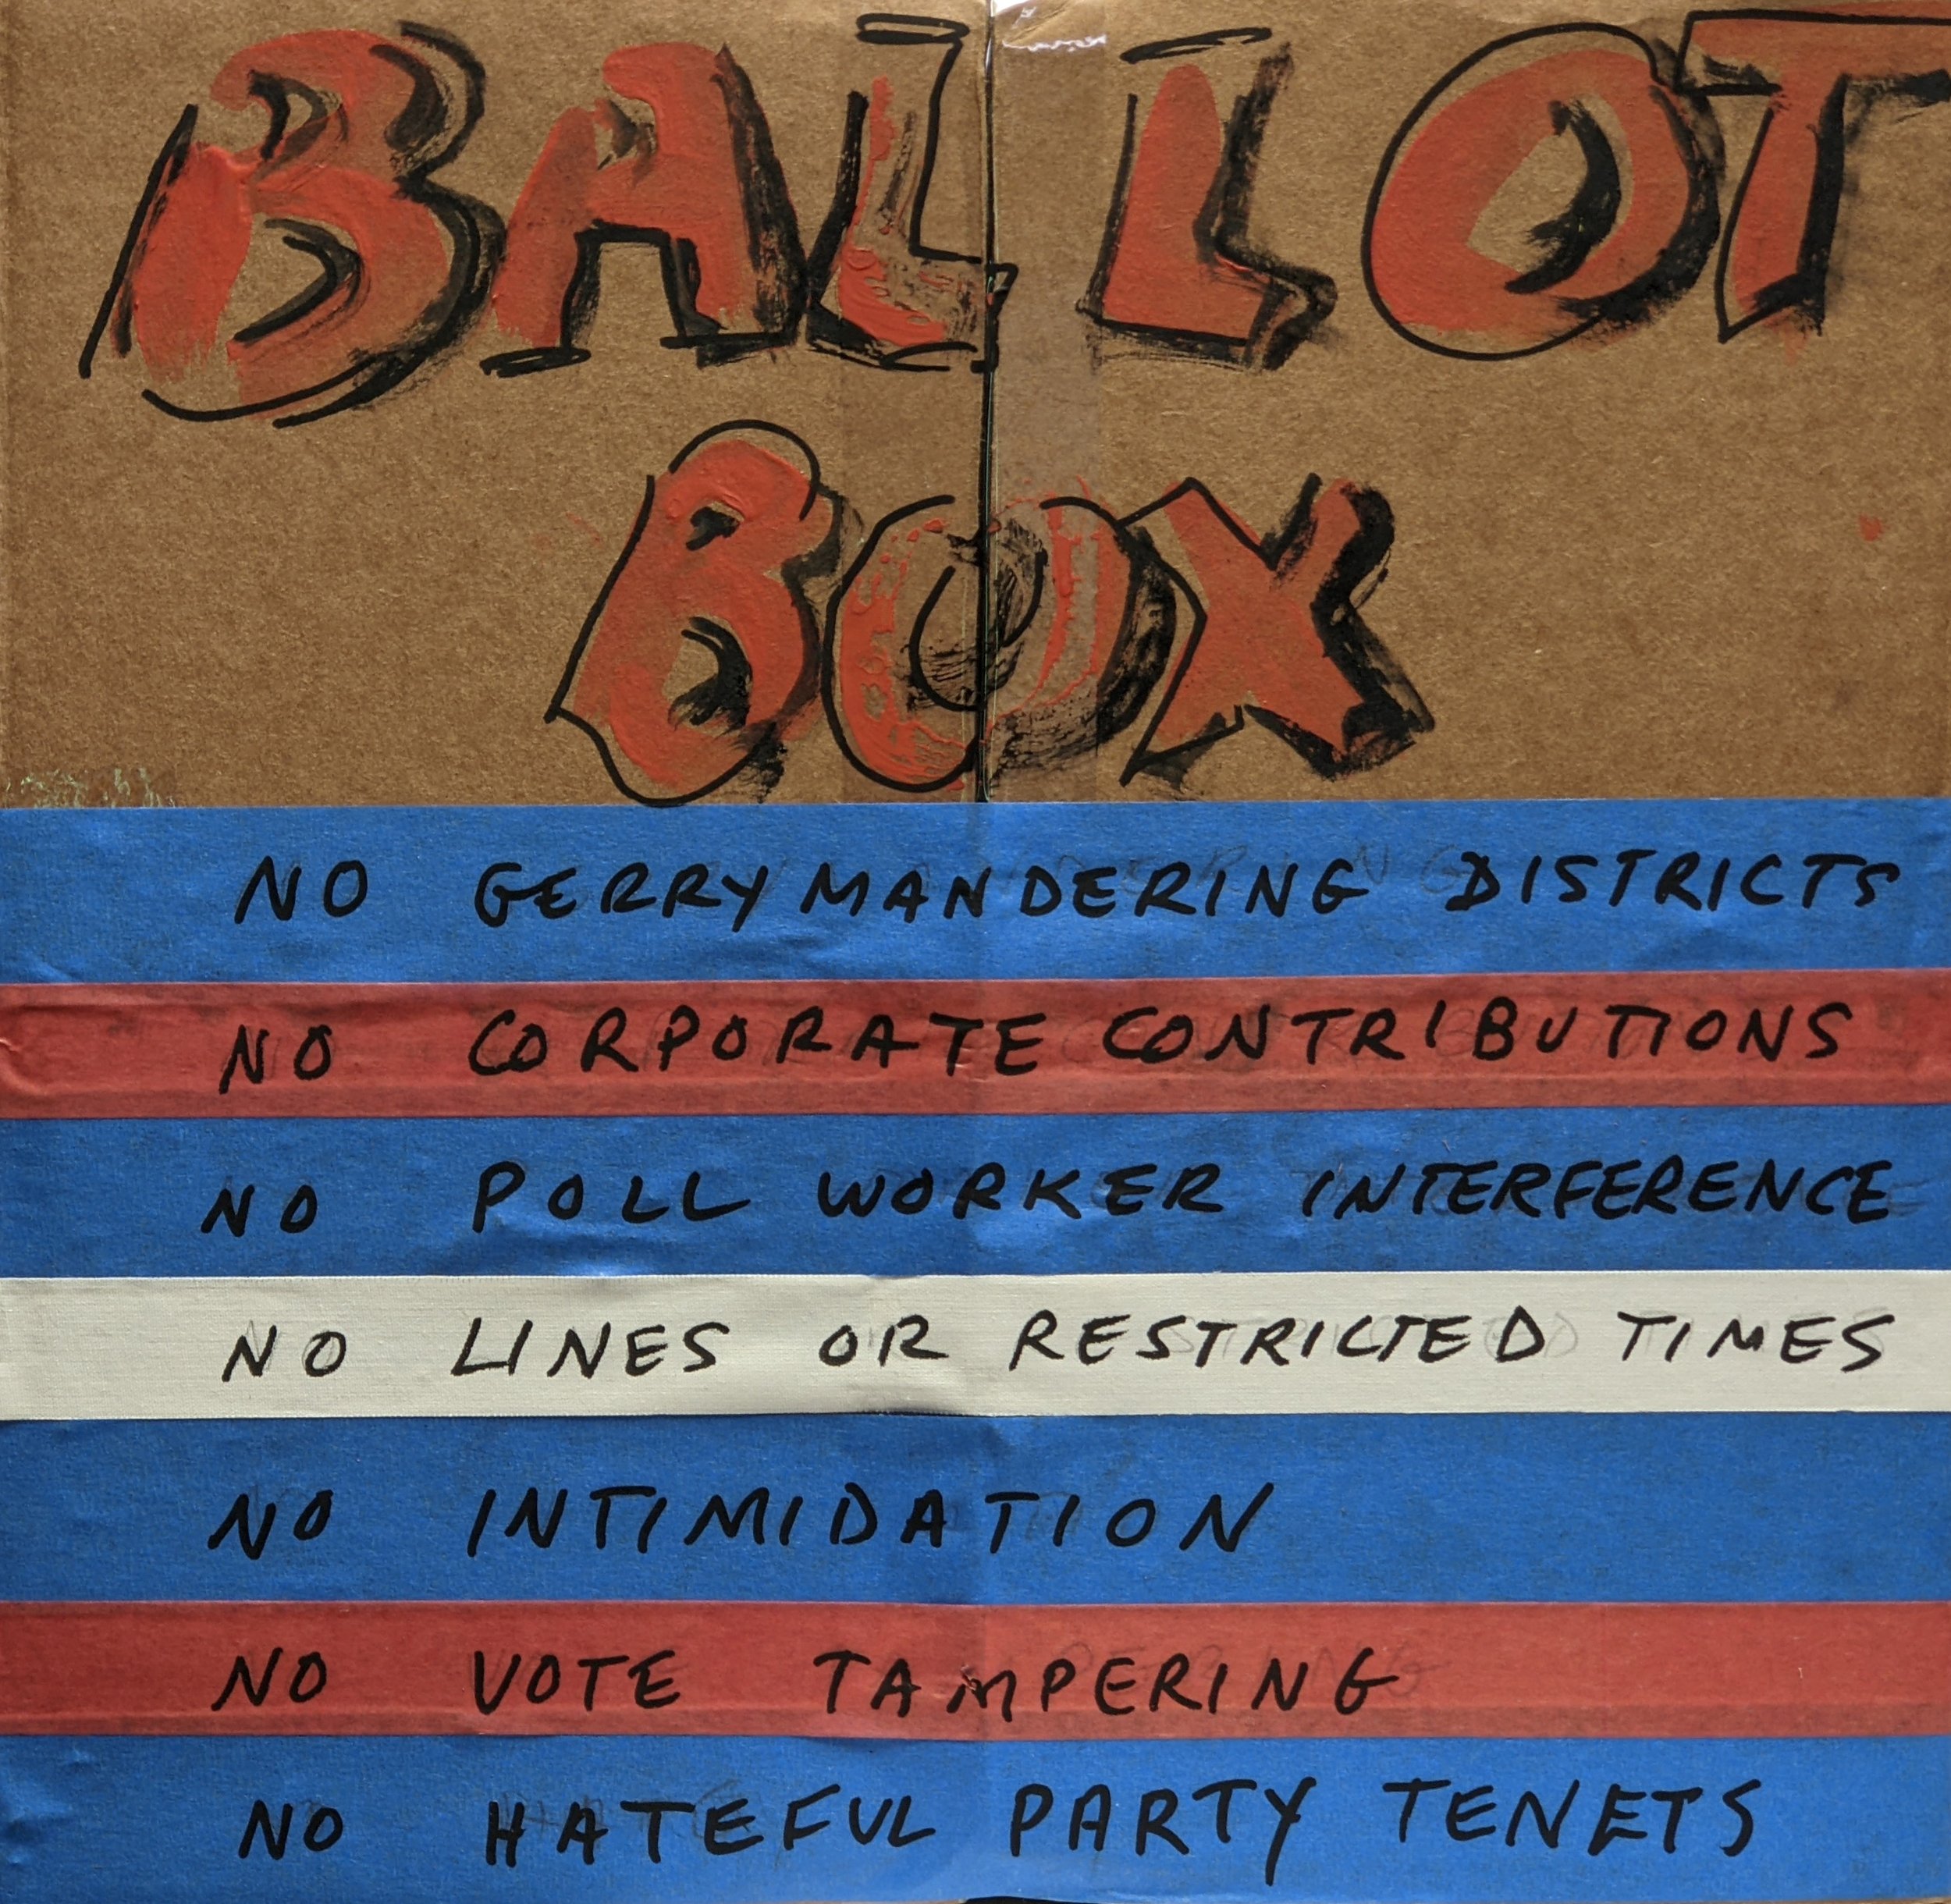 Ballot box.jpg